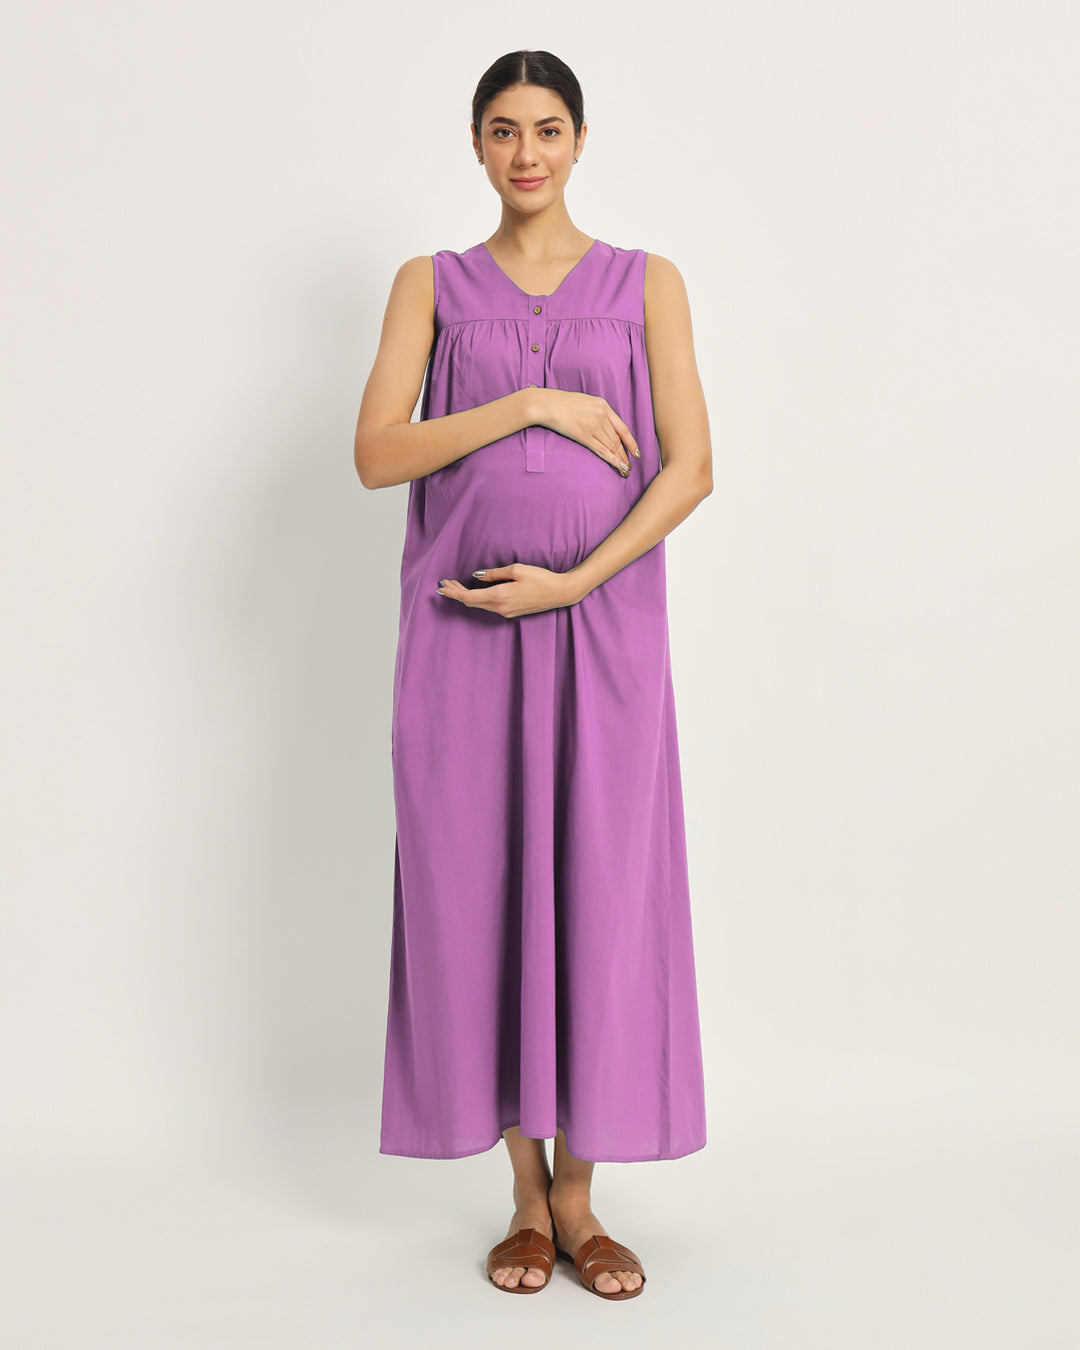 Wisteria Mommylicious Maternity & Nursing Dress